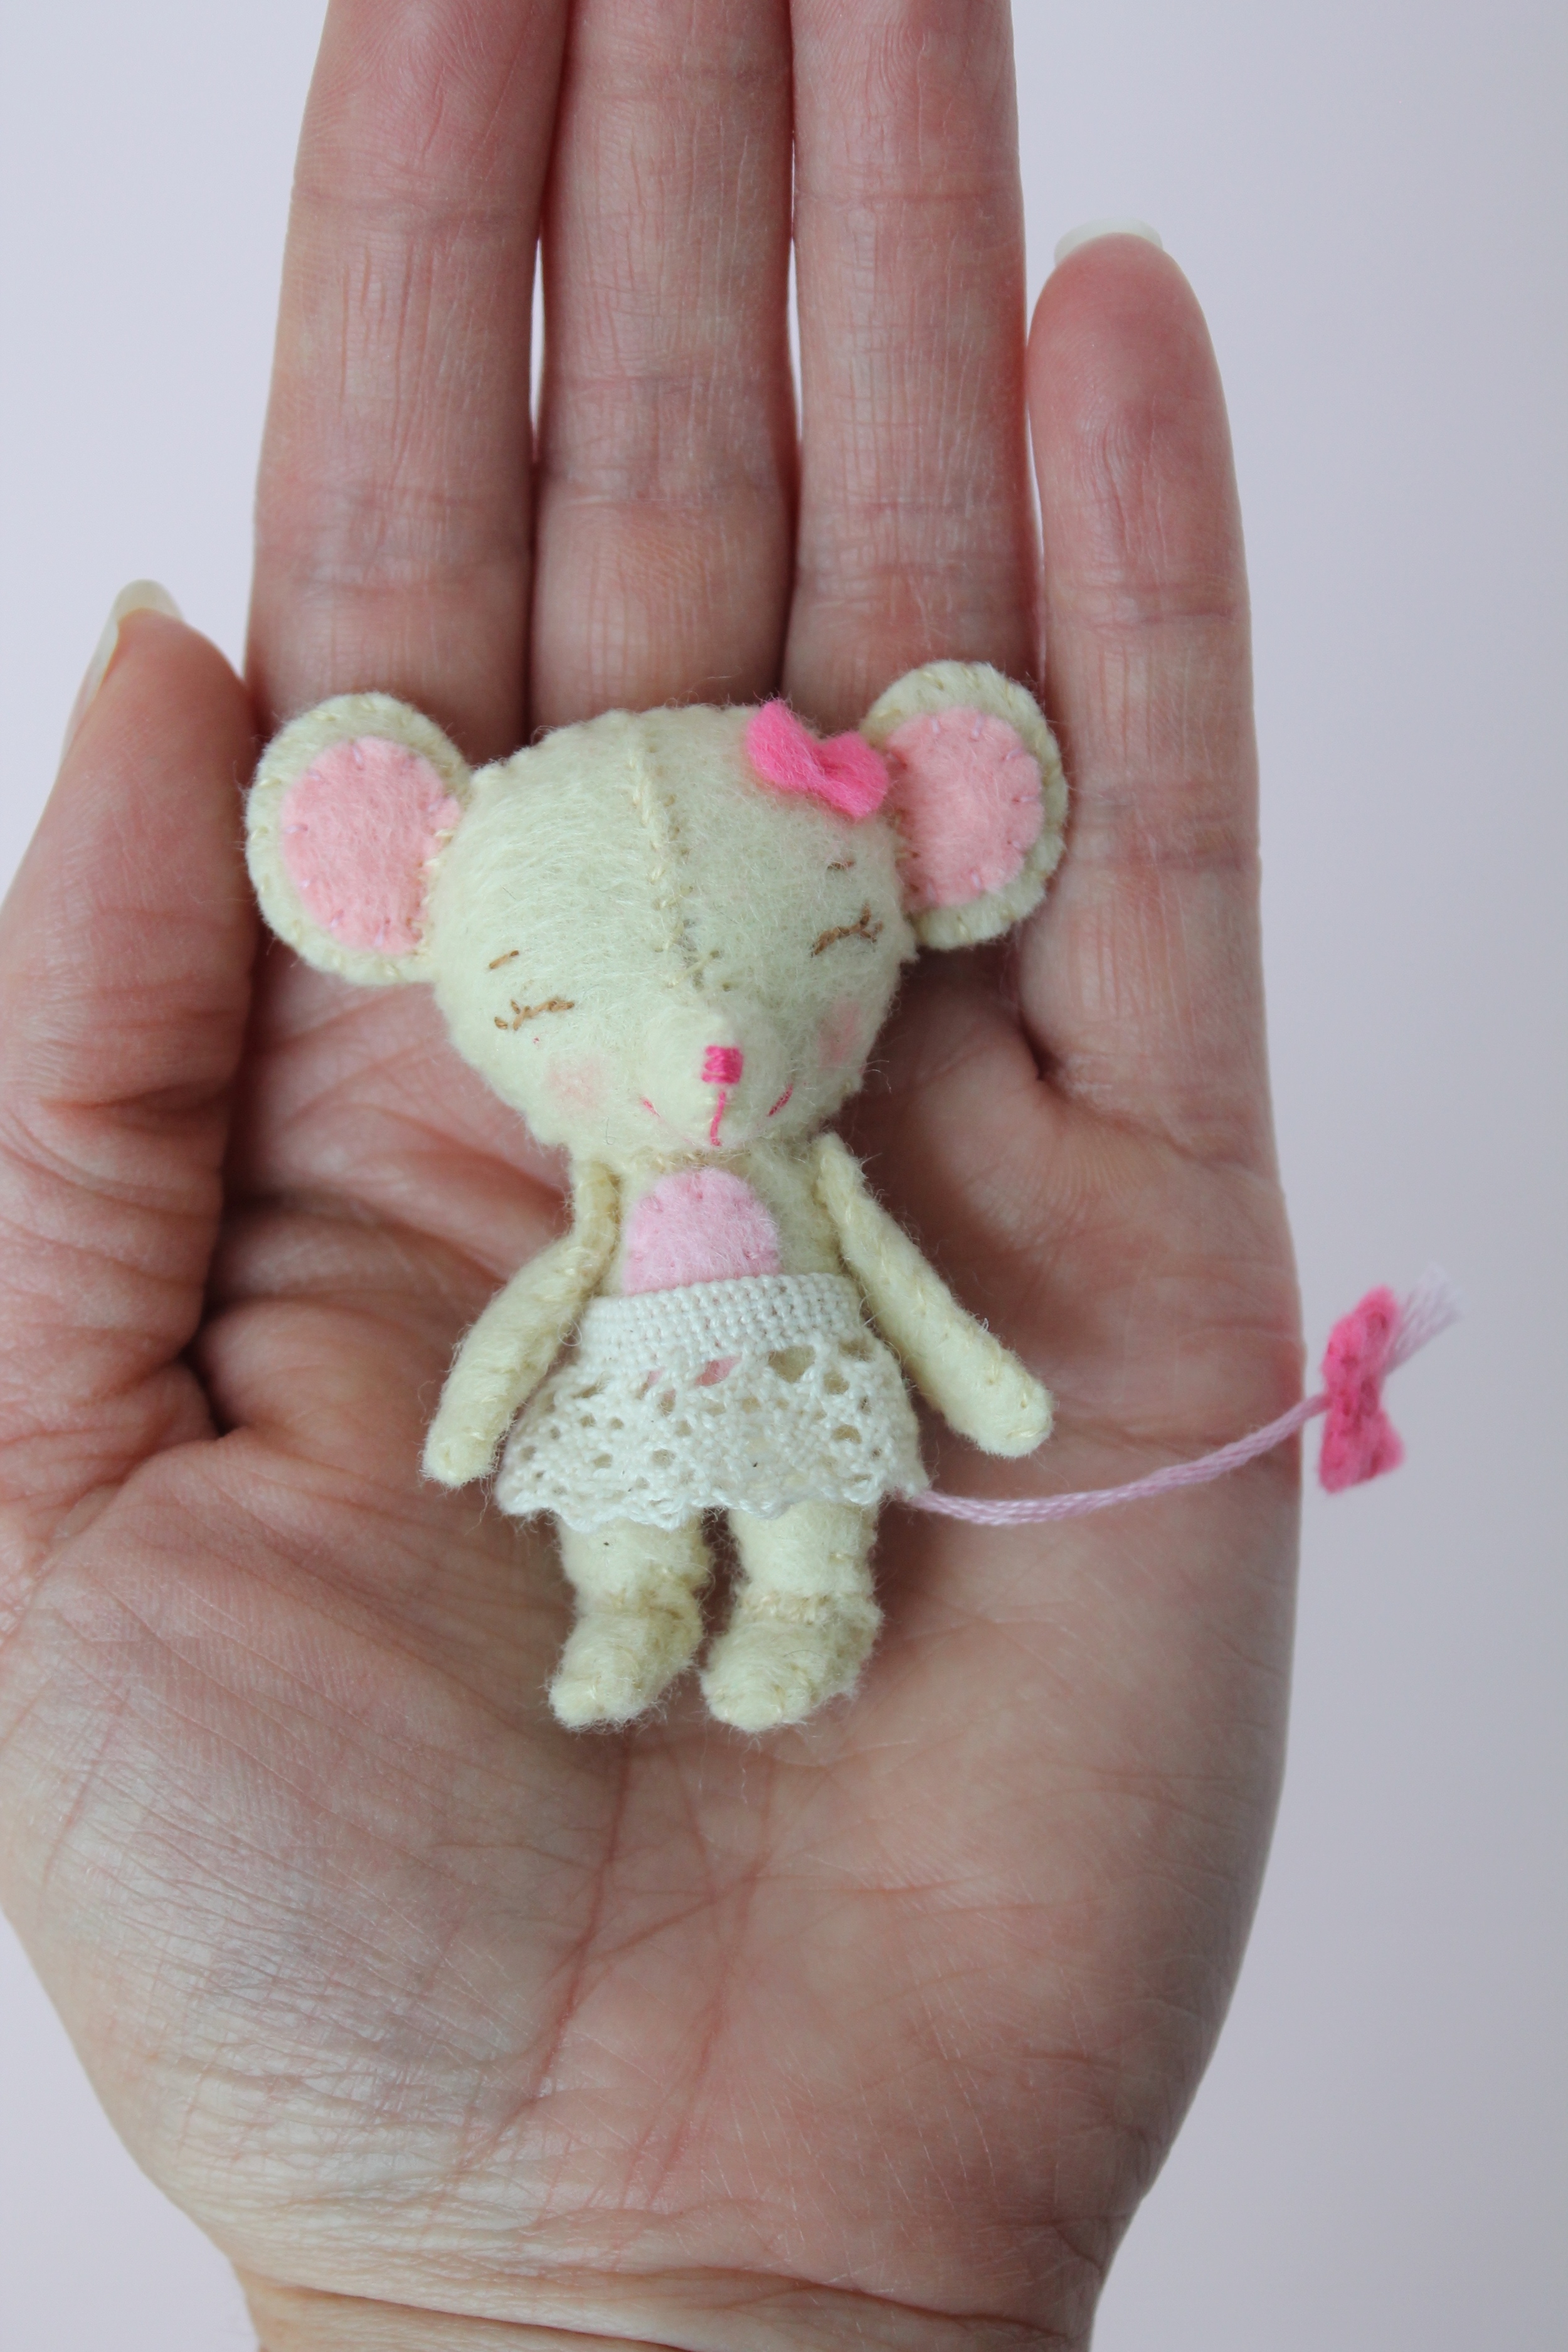 Tiny Felt mouse. Pattern from Gingermelon ETSY shop.